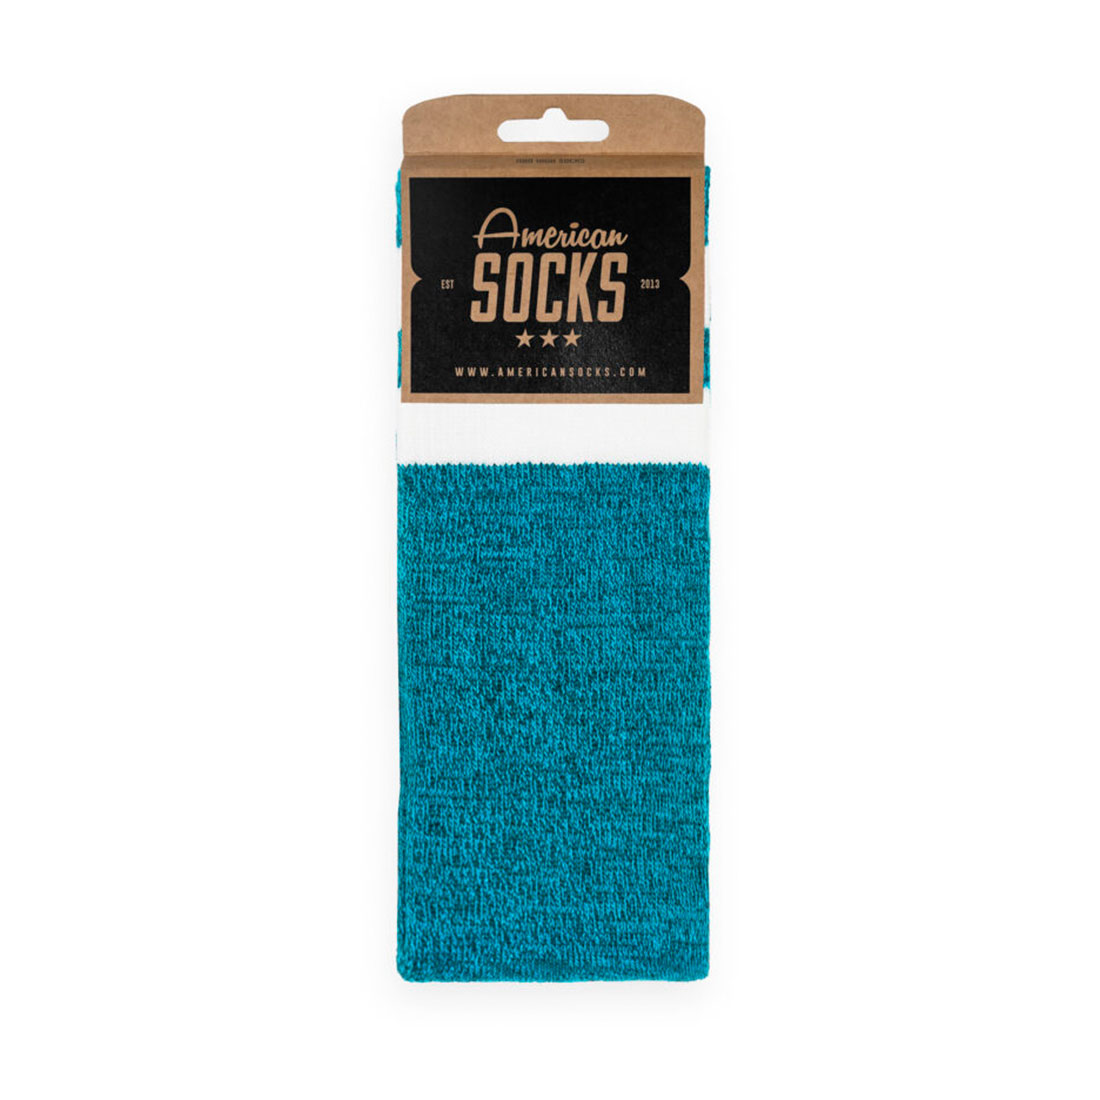 American Socks BTN - Turquoise Noise Apparel Socks